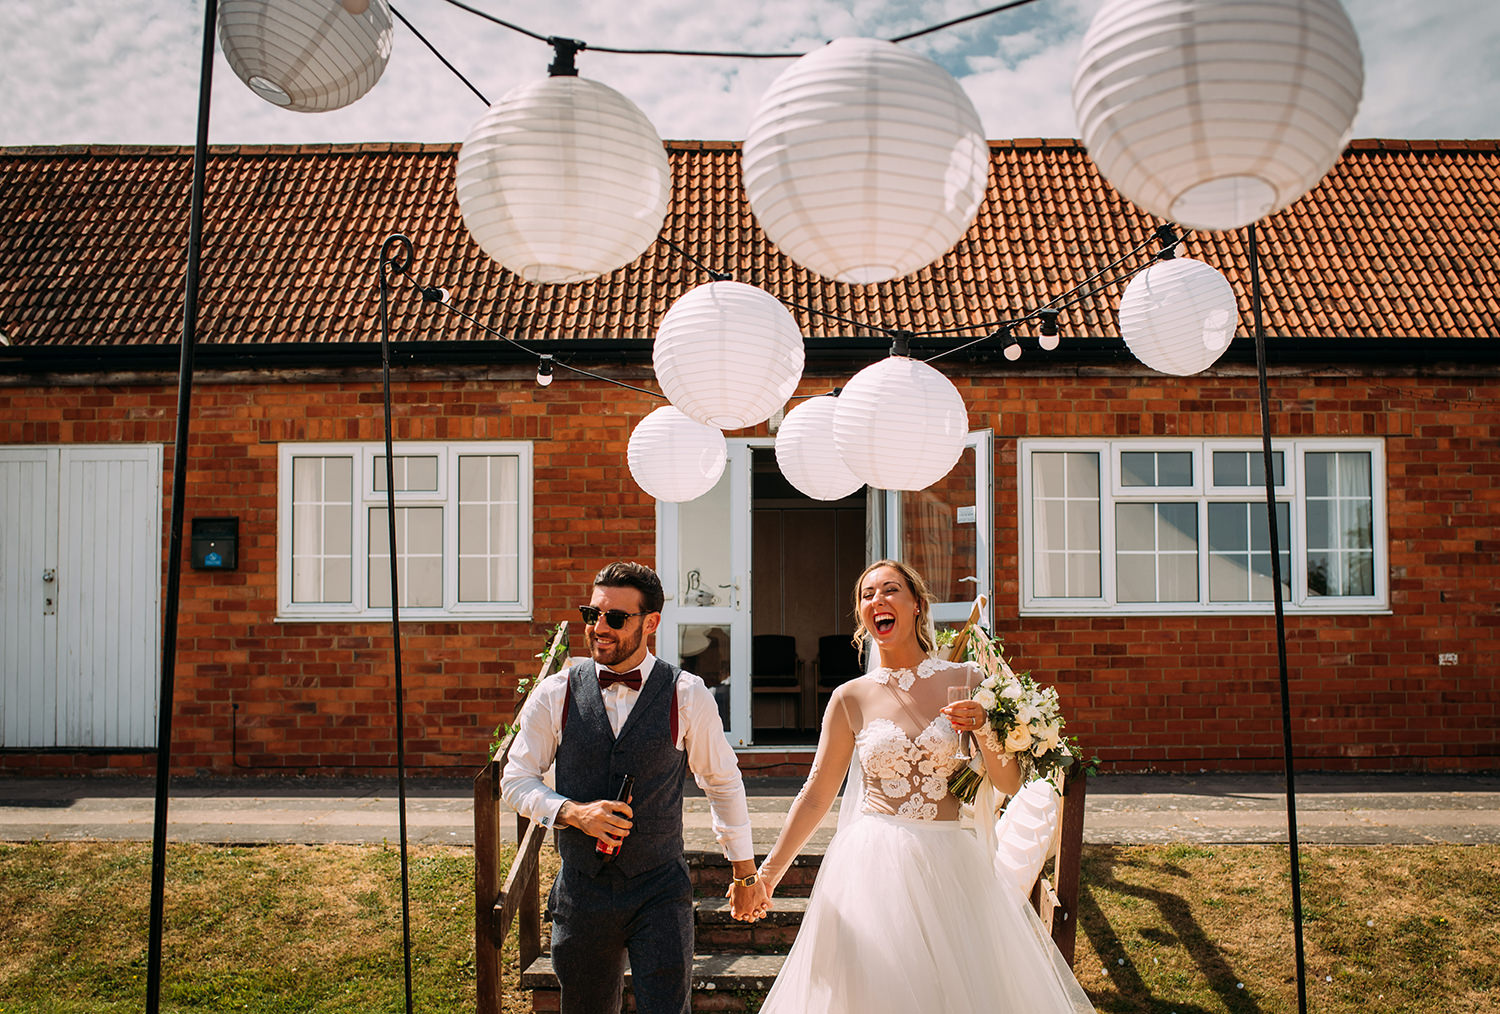  bride and groom enter the reception marquee under lanterns 